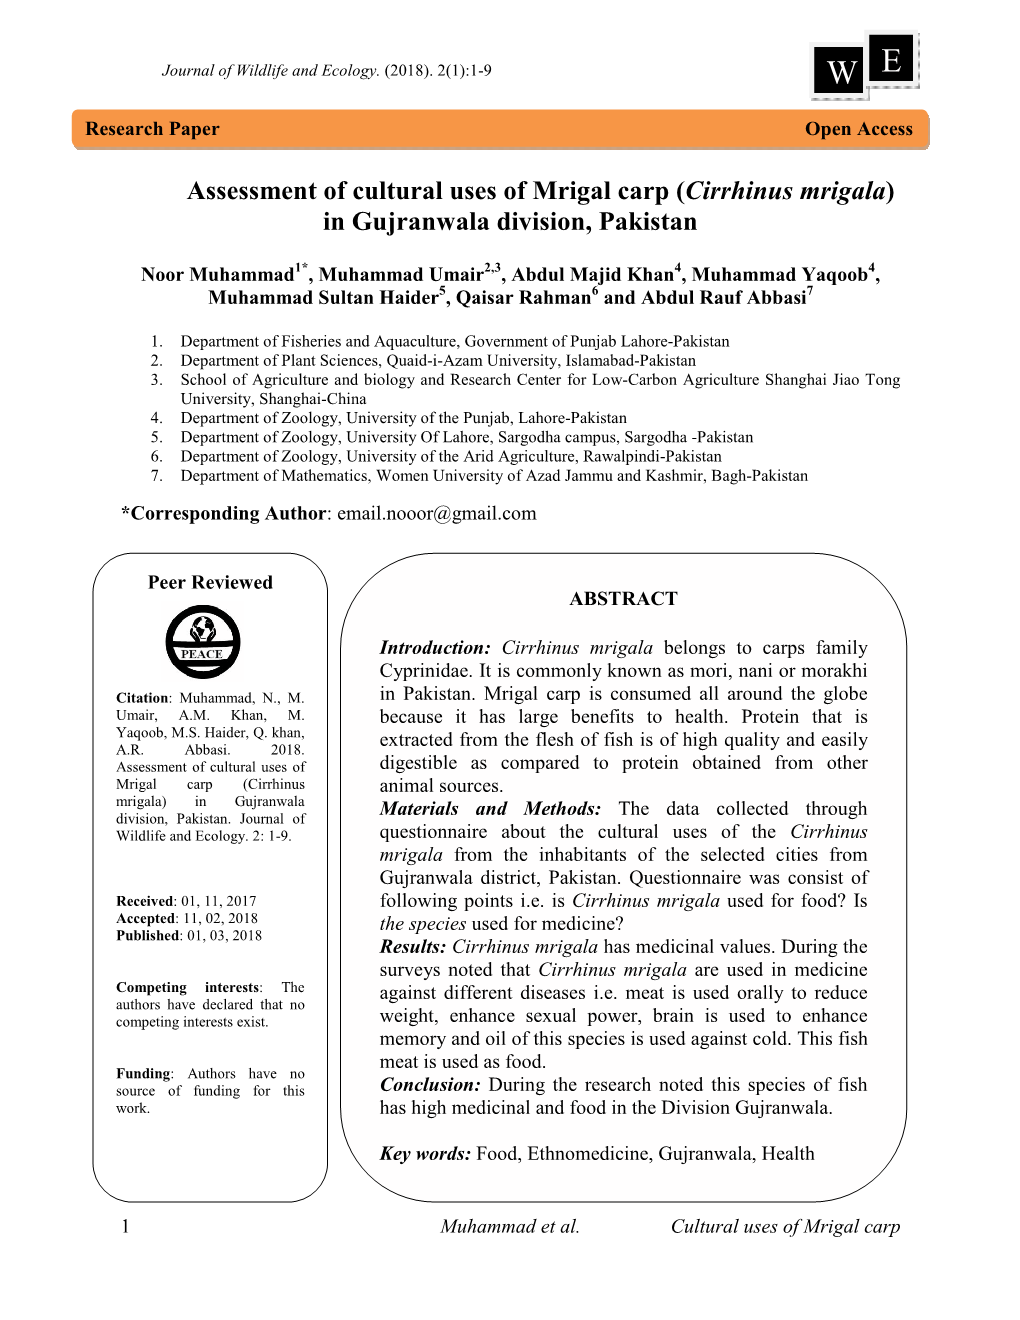 Assessment of Cultural Uses of Mrigal Carp (Cirrhinus Mrigala) in Gujranwala Division, Pakistan